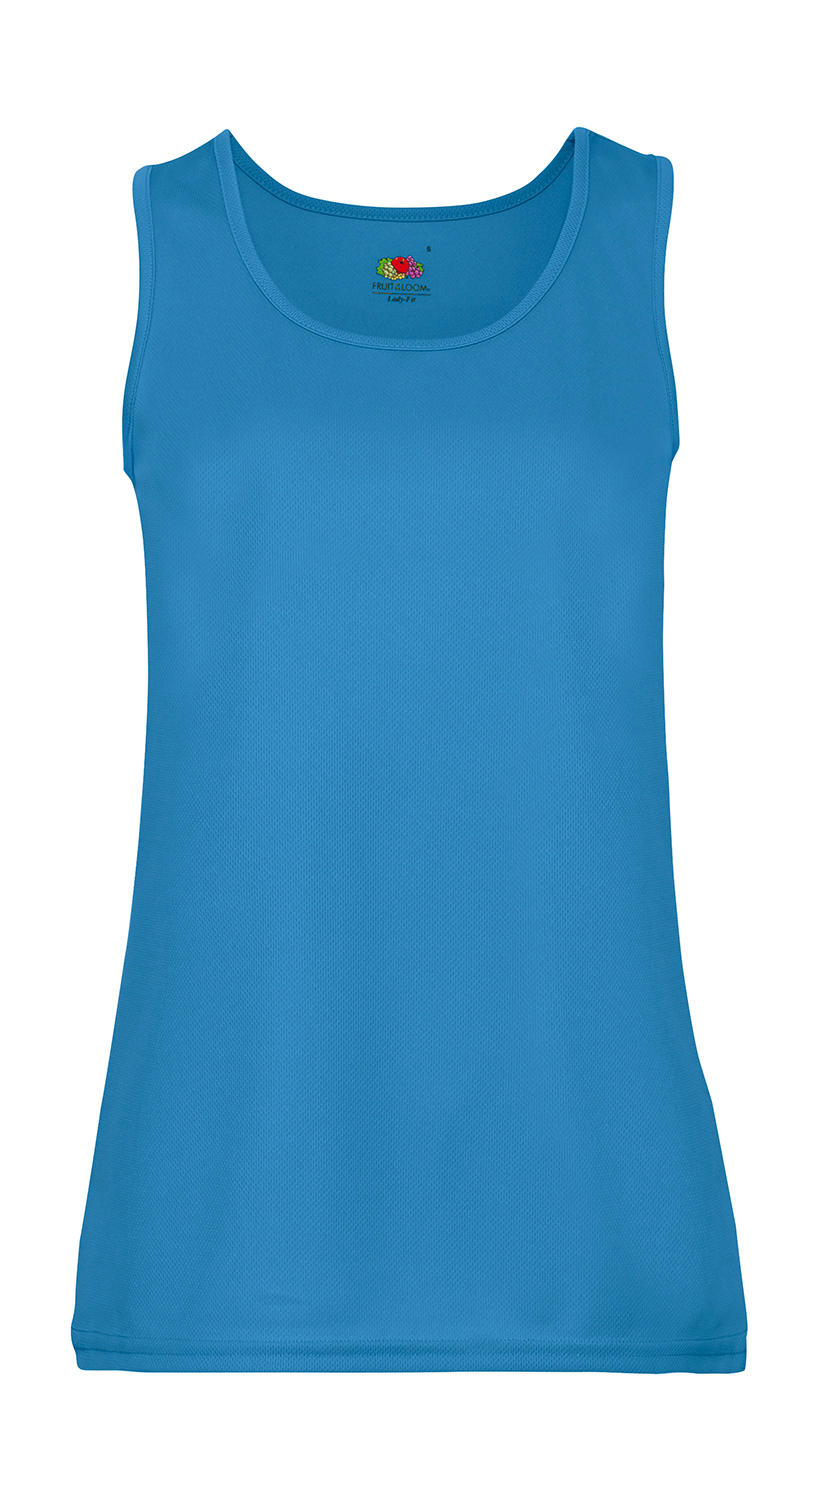  Ladies Performance Vest in Farbe Azure Blue